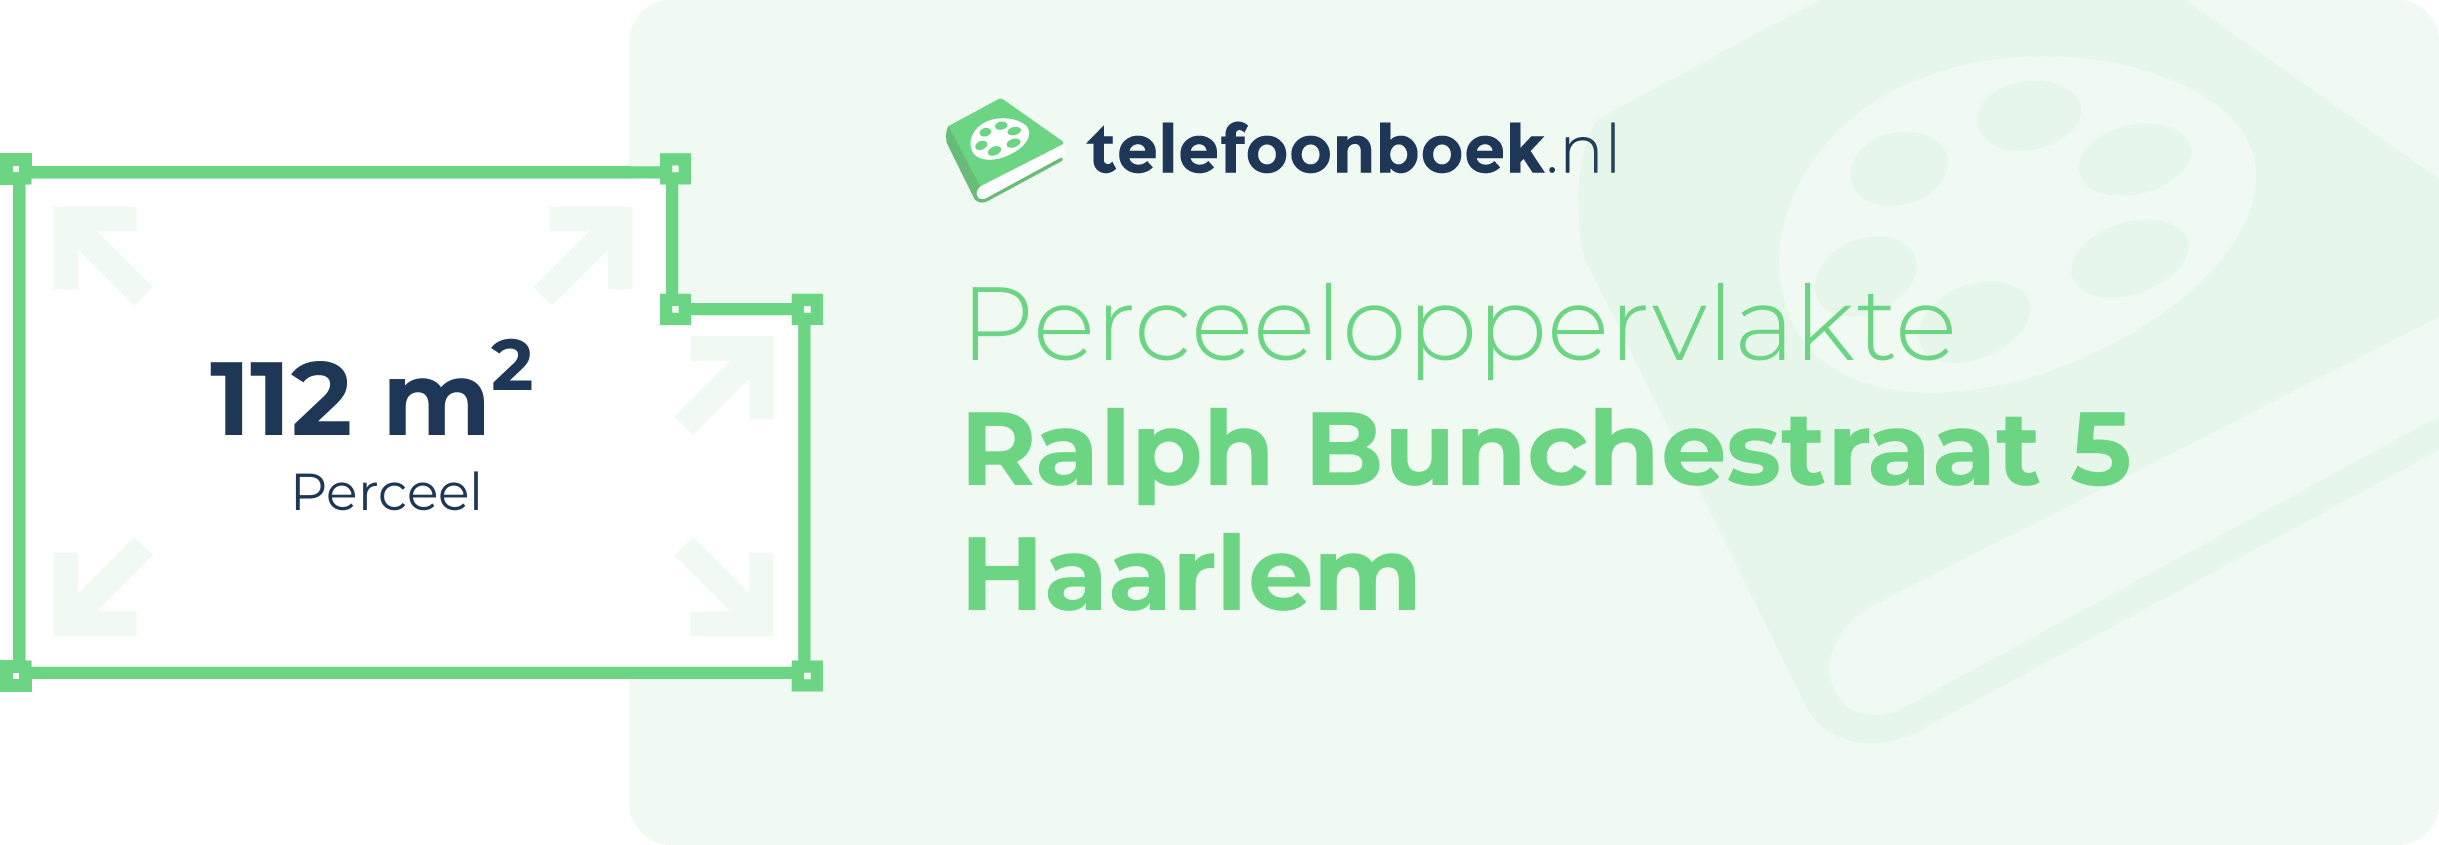 Perceeloppervlakte Ralph Bunchestraat 5 Haarlem